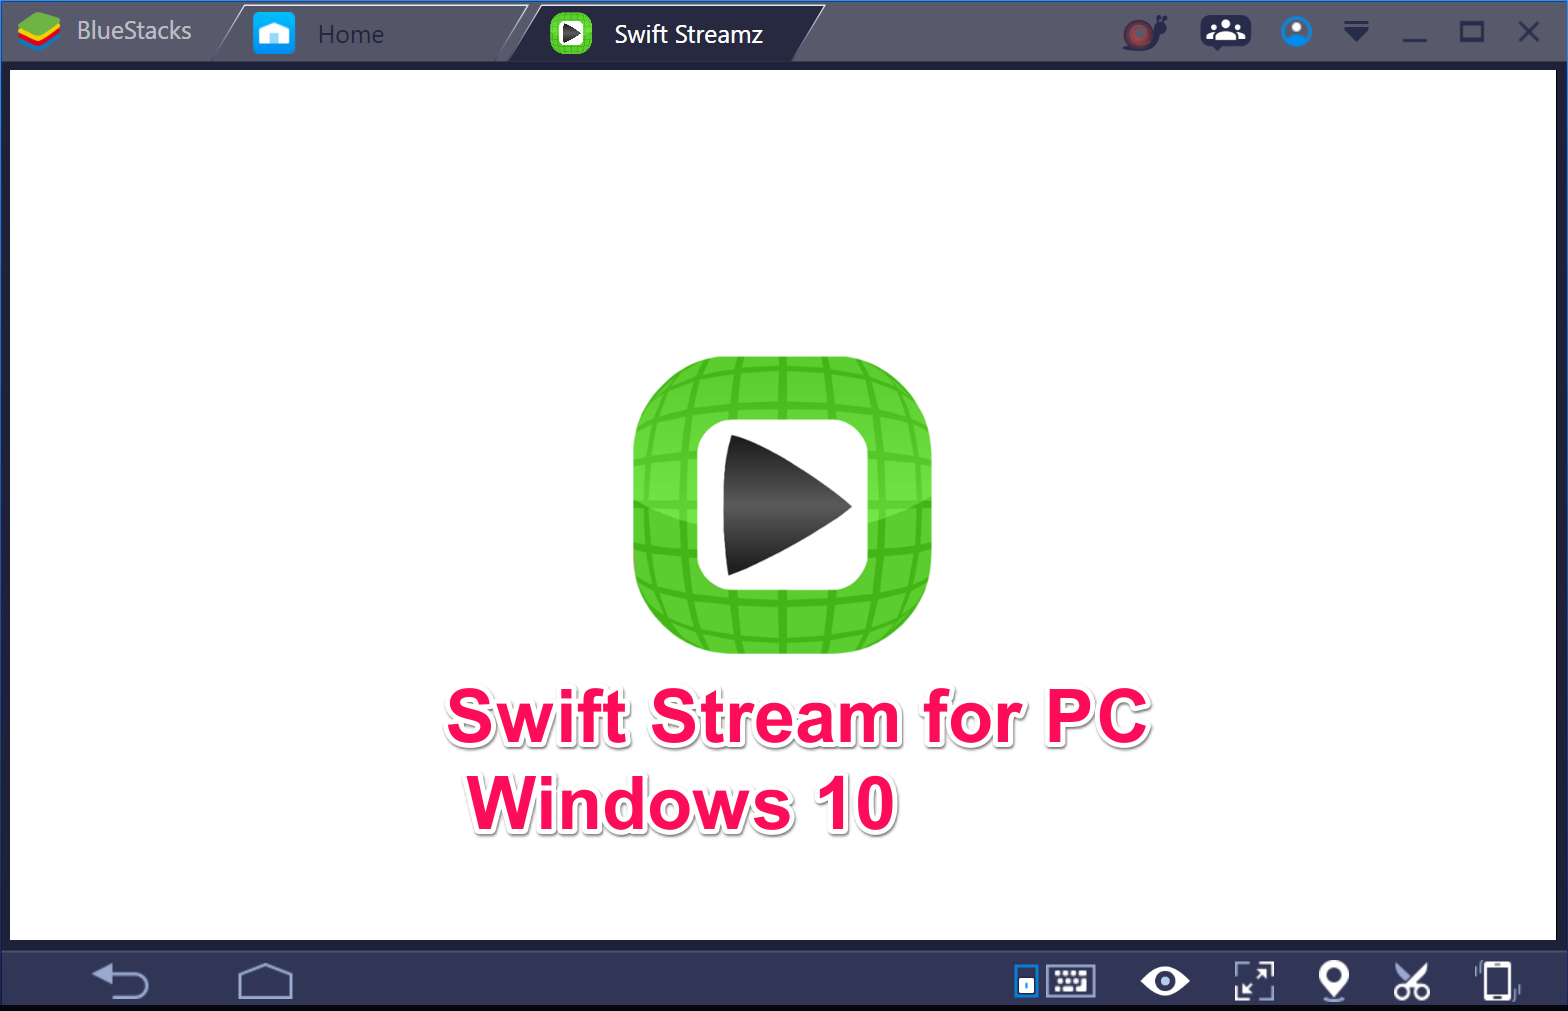 Download Swift Streamz for PC Windows 10. | AxeeTech